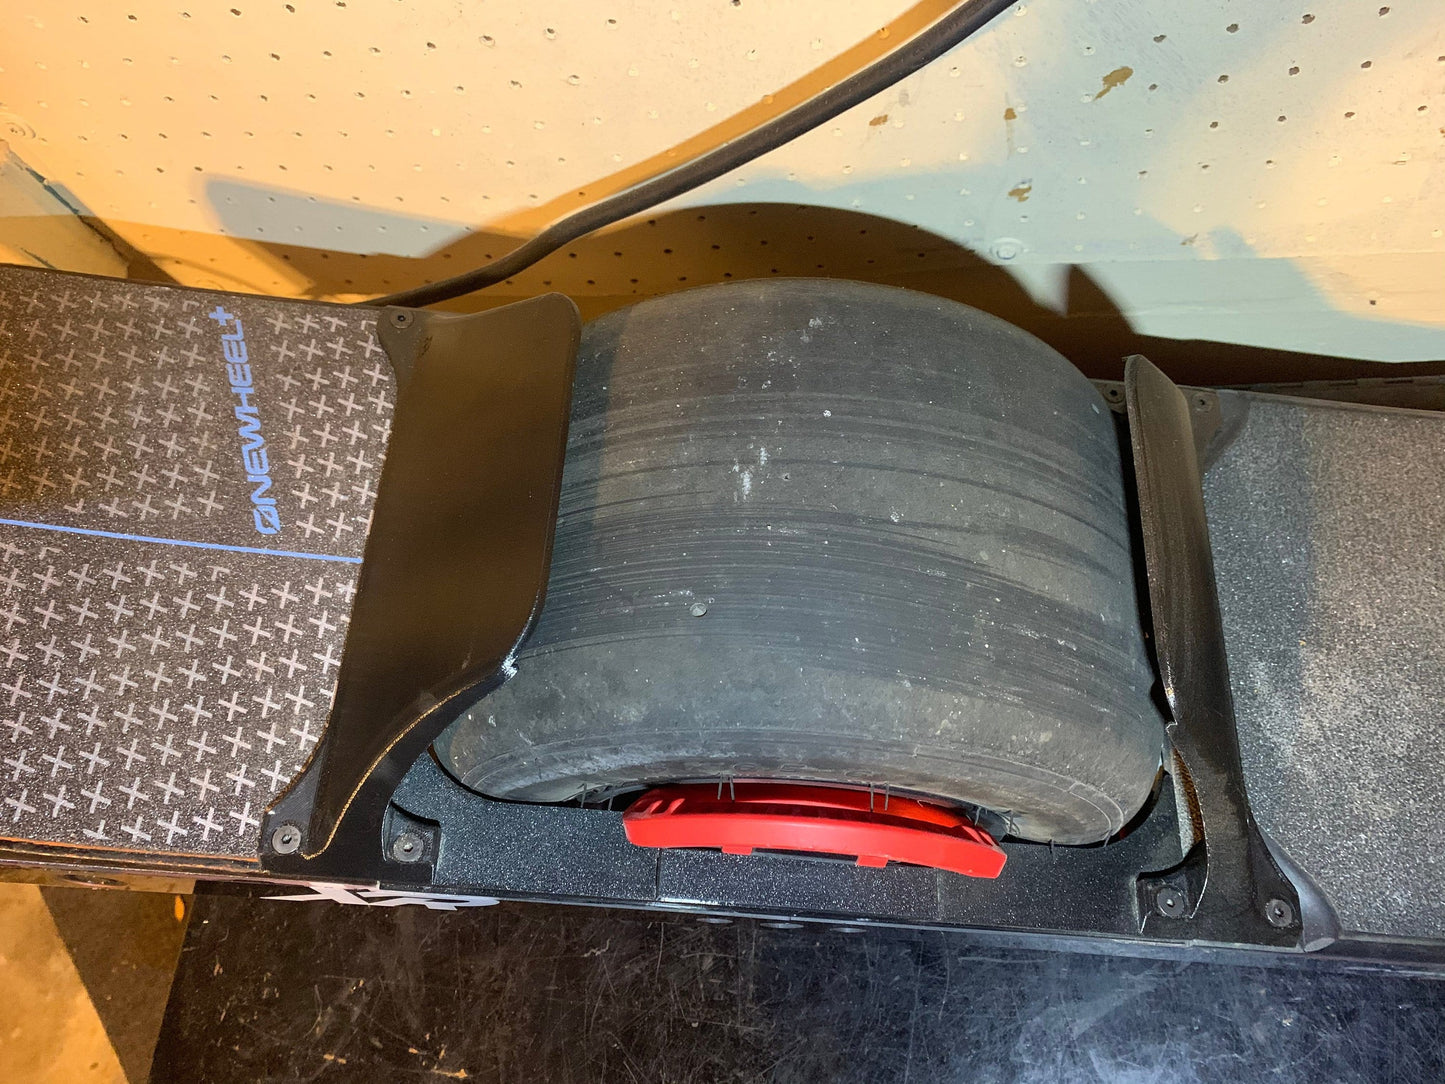 Fender Delete for Onewheel XR (Maghandle Compatible) - FloaterShack